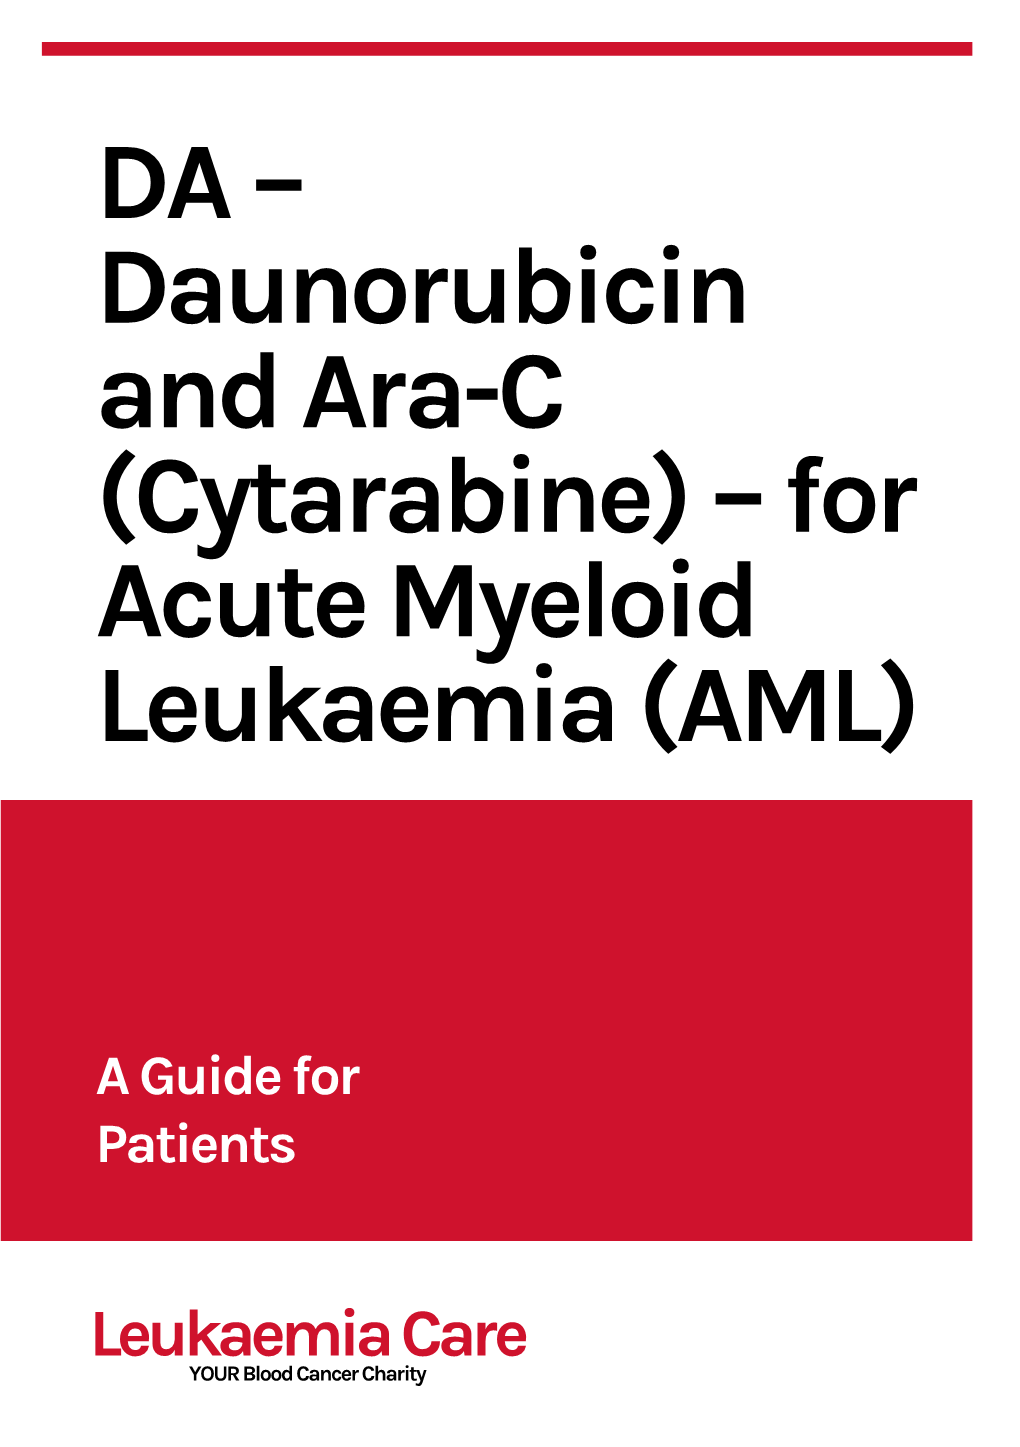 Daunorubicin and Ara-C (Cytarabine) – for Acute Myeloid Leukaemia (AML)